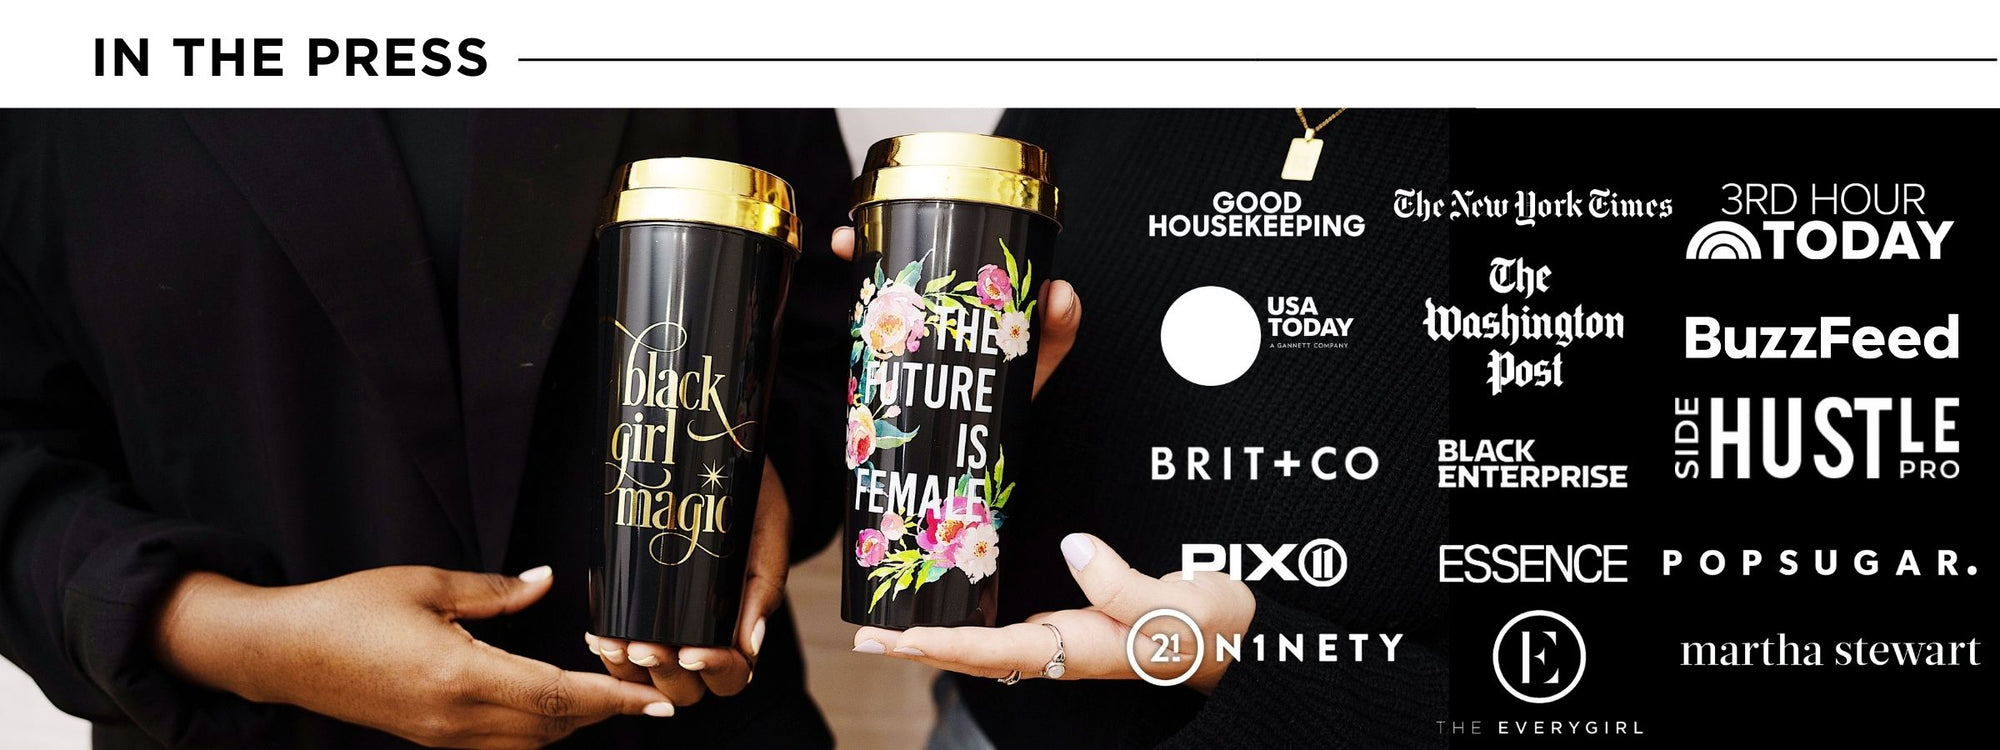 Effie's Paper The Future Is Female- Travel Coffee Mug